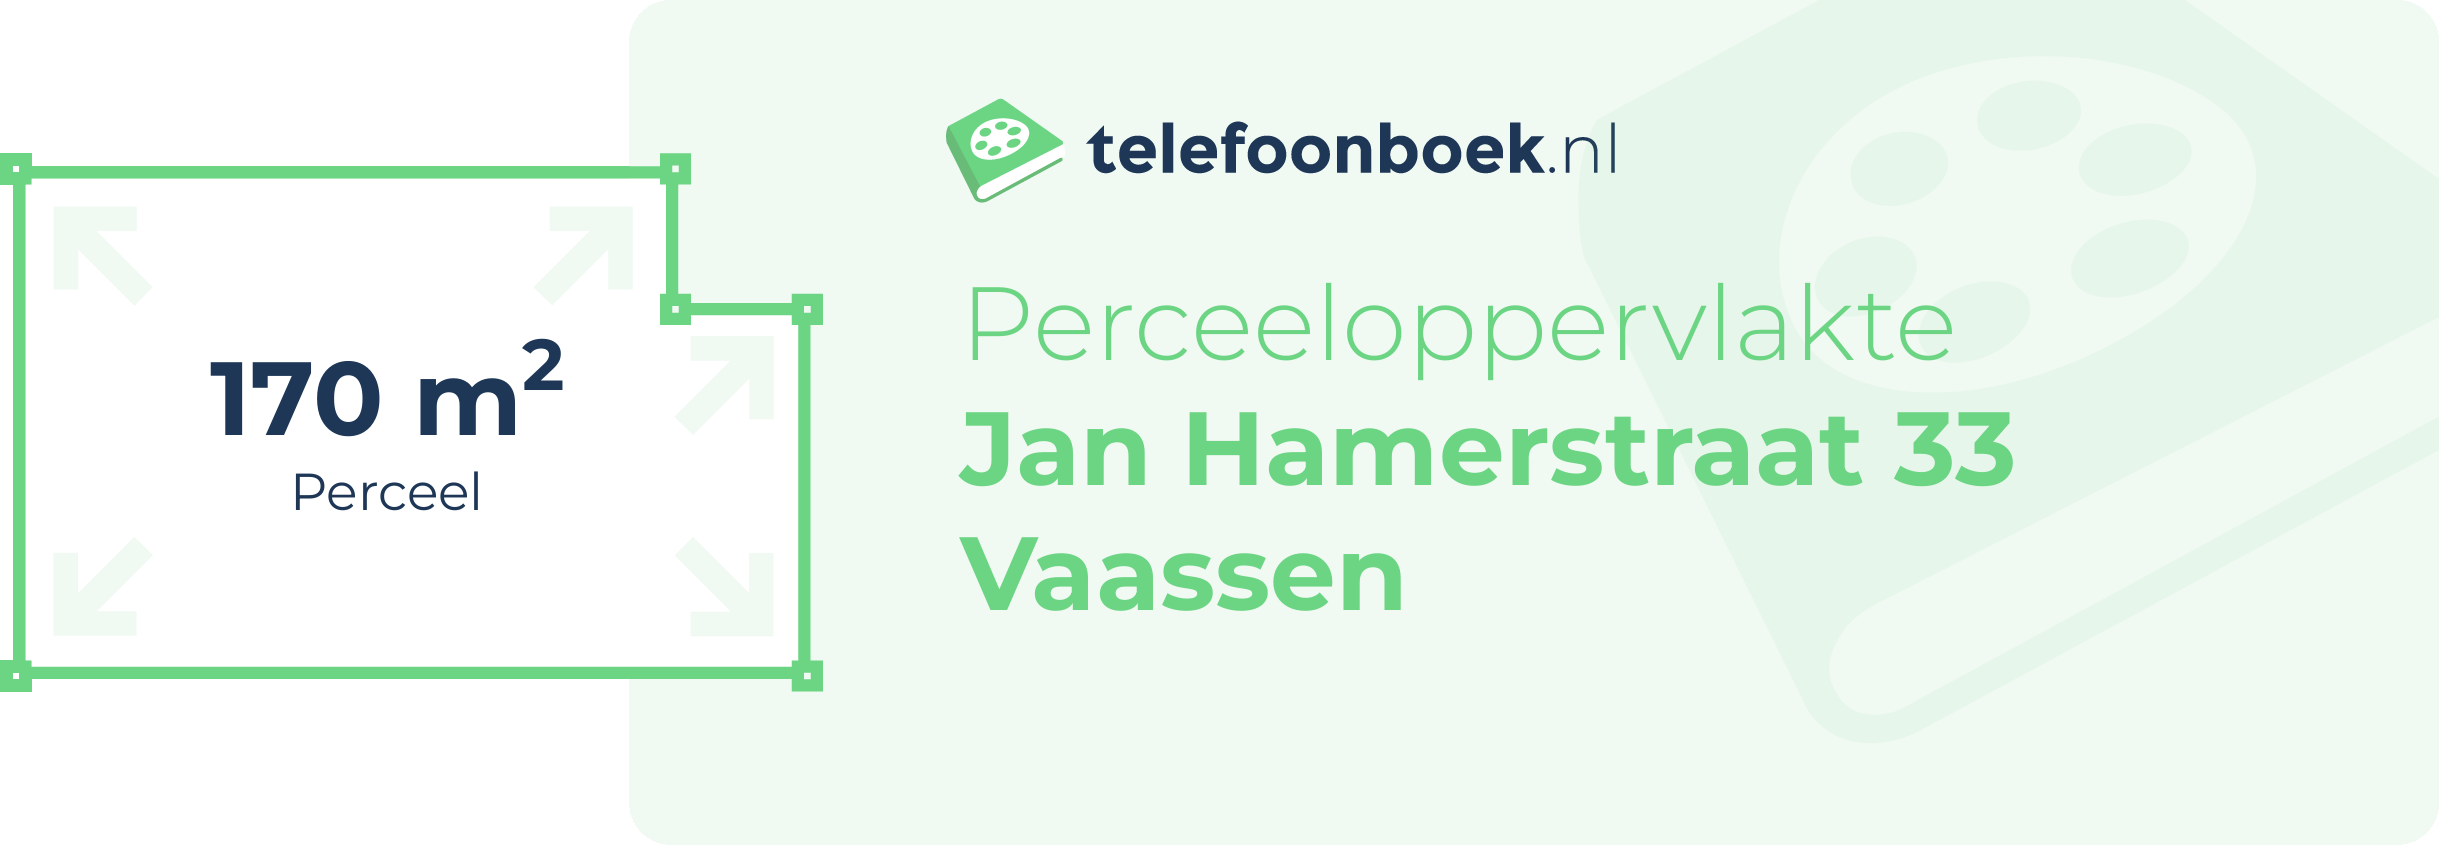 Perceeloppervlakte Jan Hamerstraat 33 Vaassen